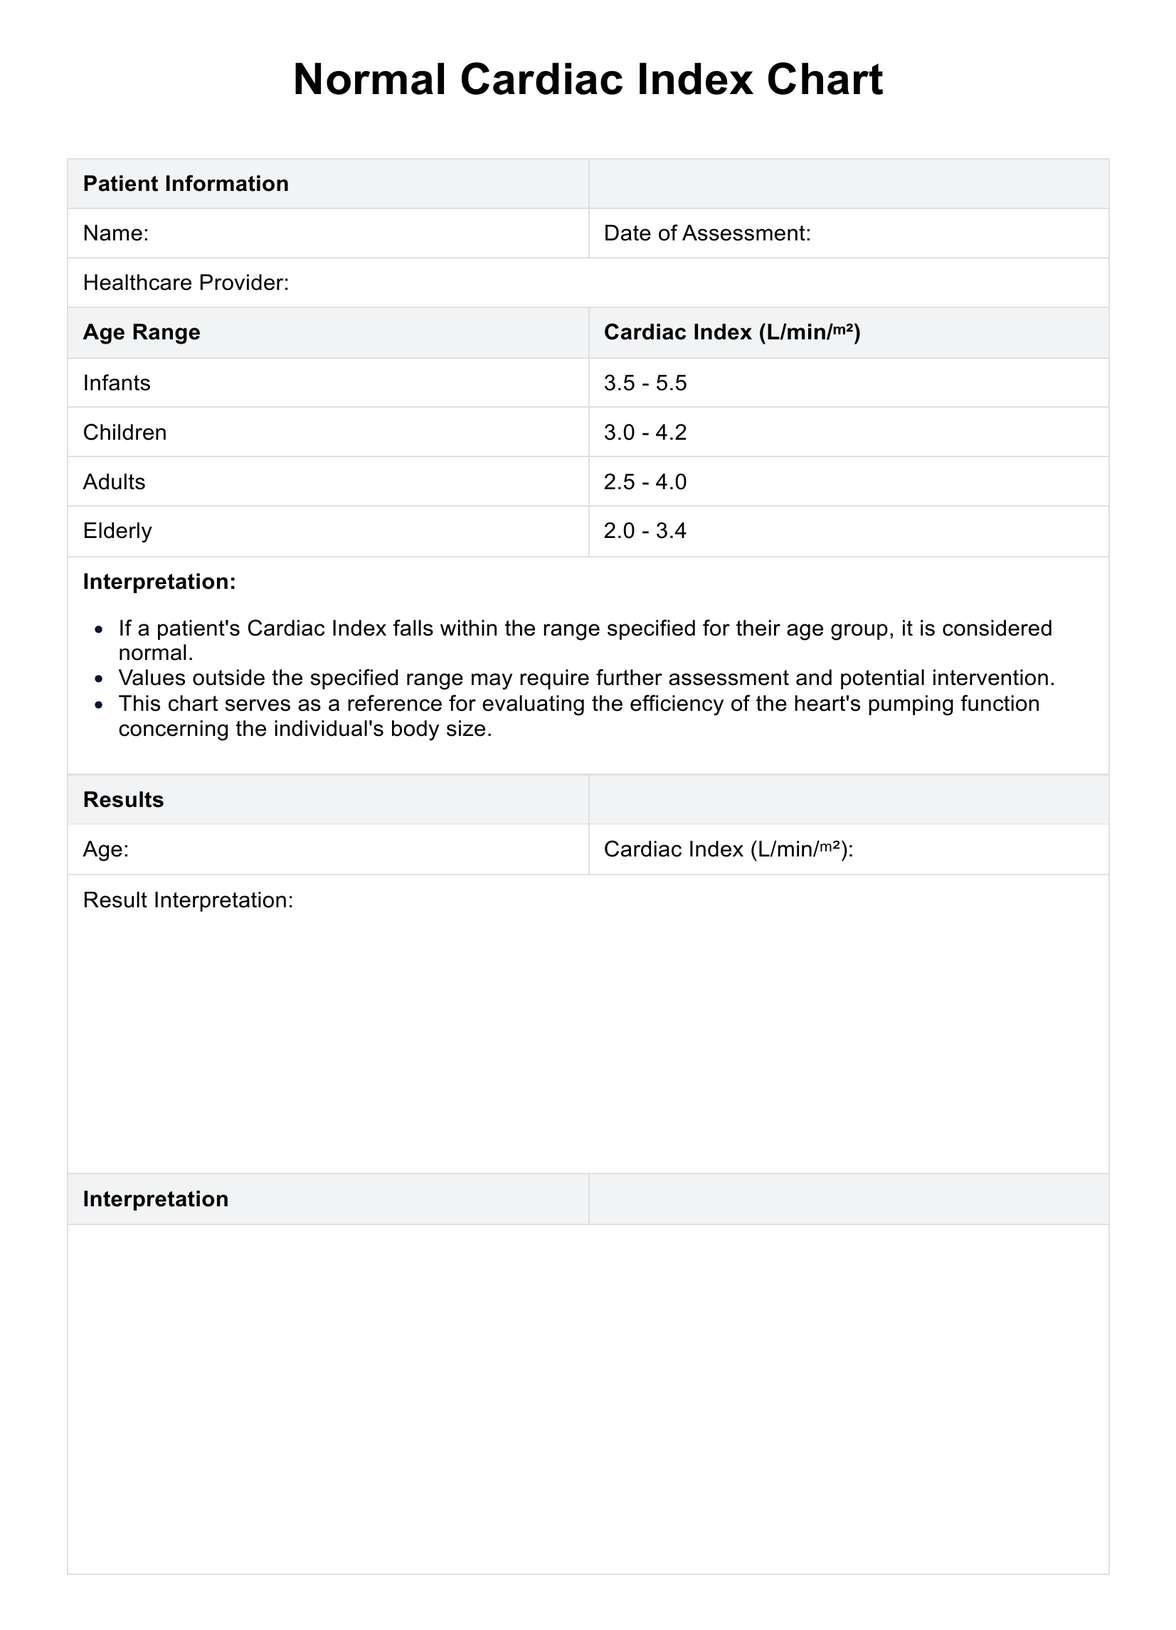 Normal Cardiac Index PDF Example